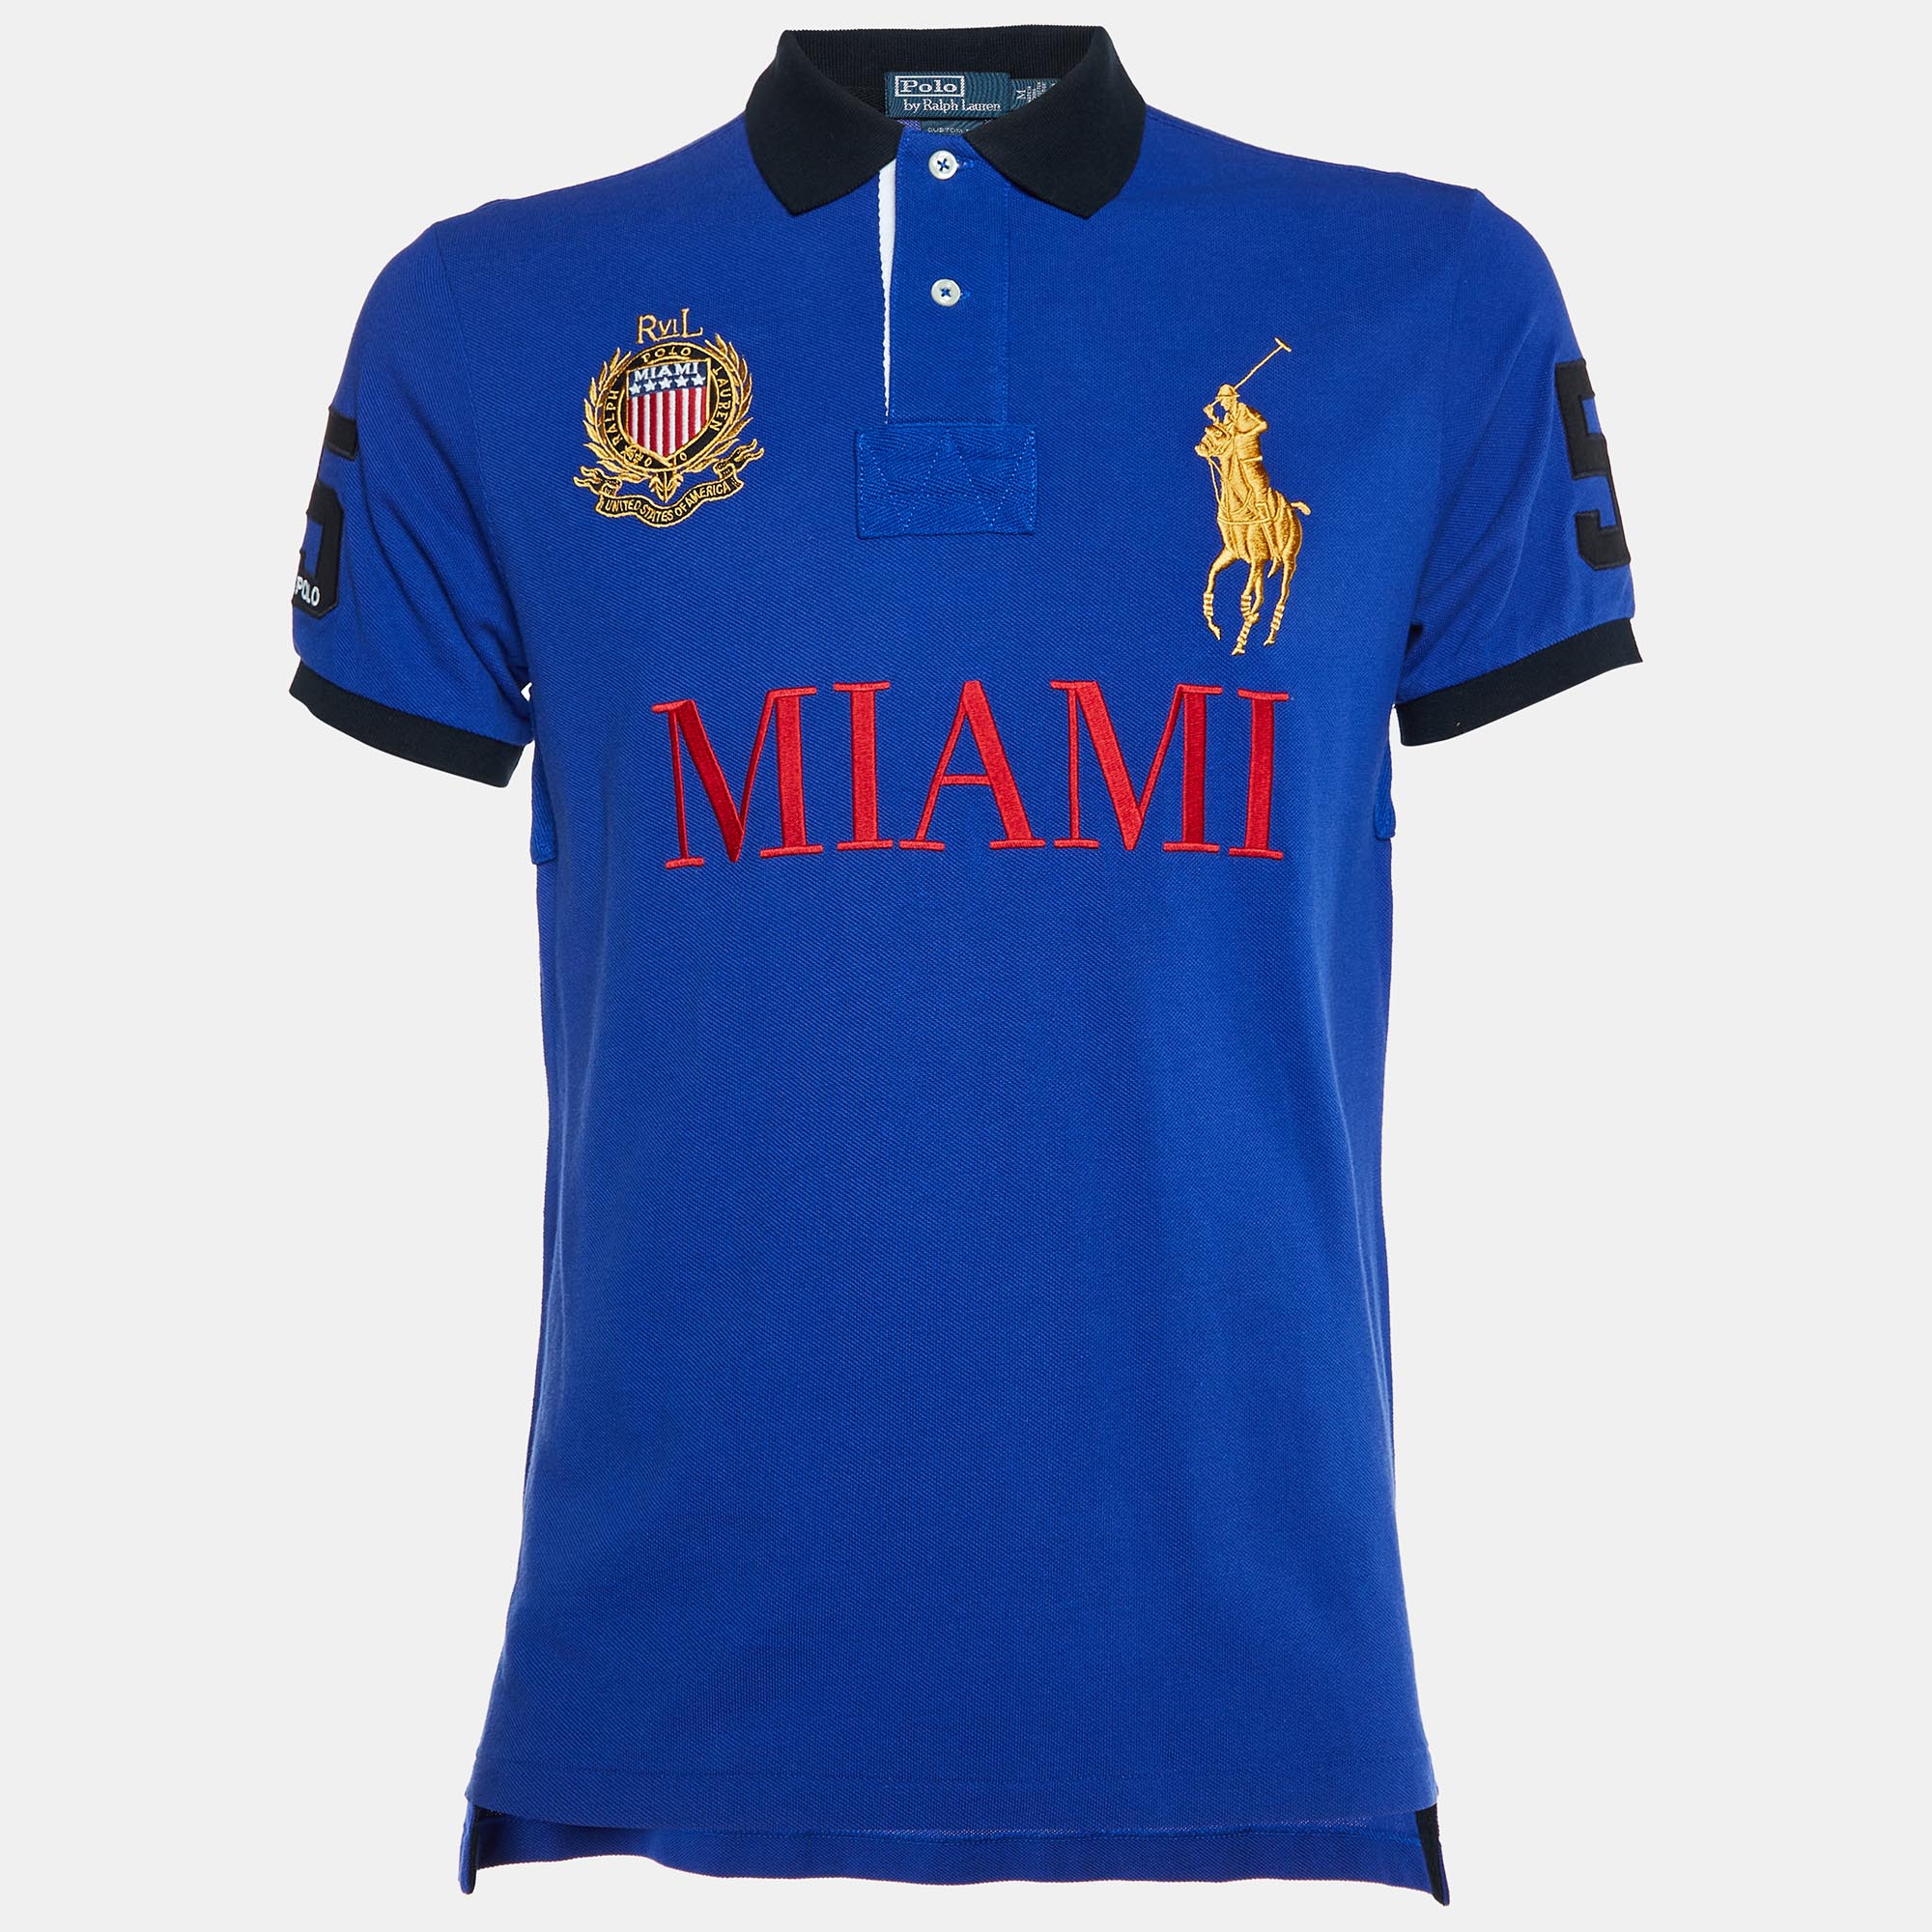 

Polo Ralph Lauren Blue Miami Embroidered Cotton Pique Polo T-Shirt M